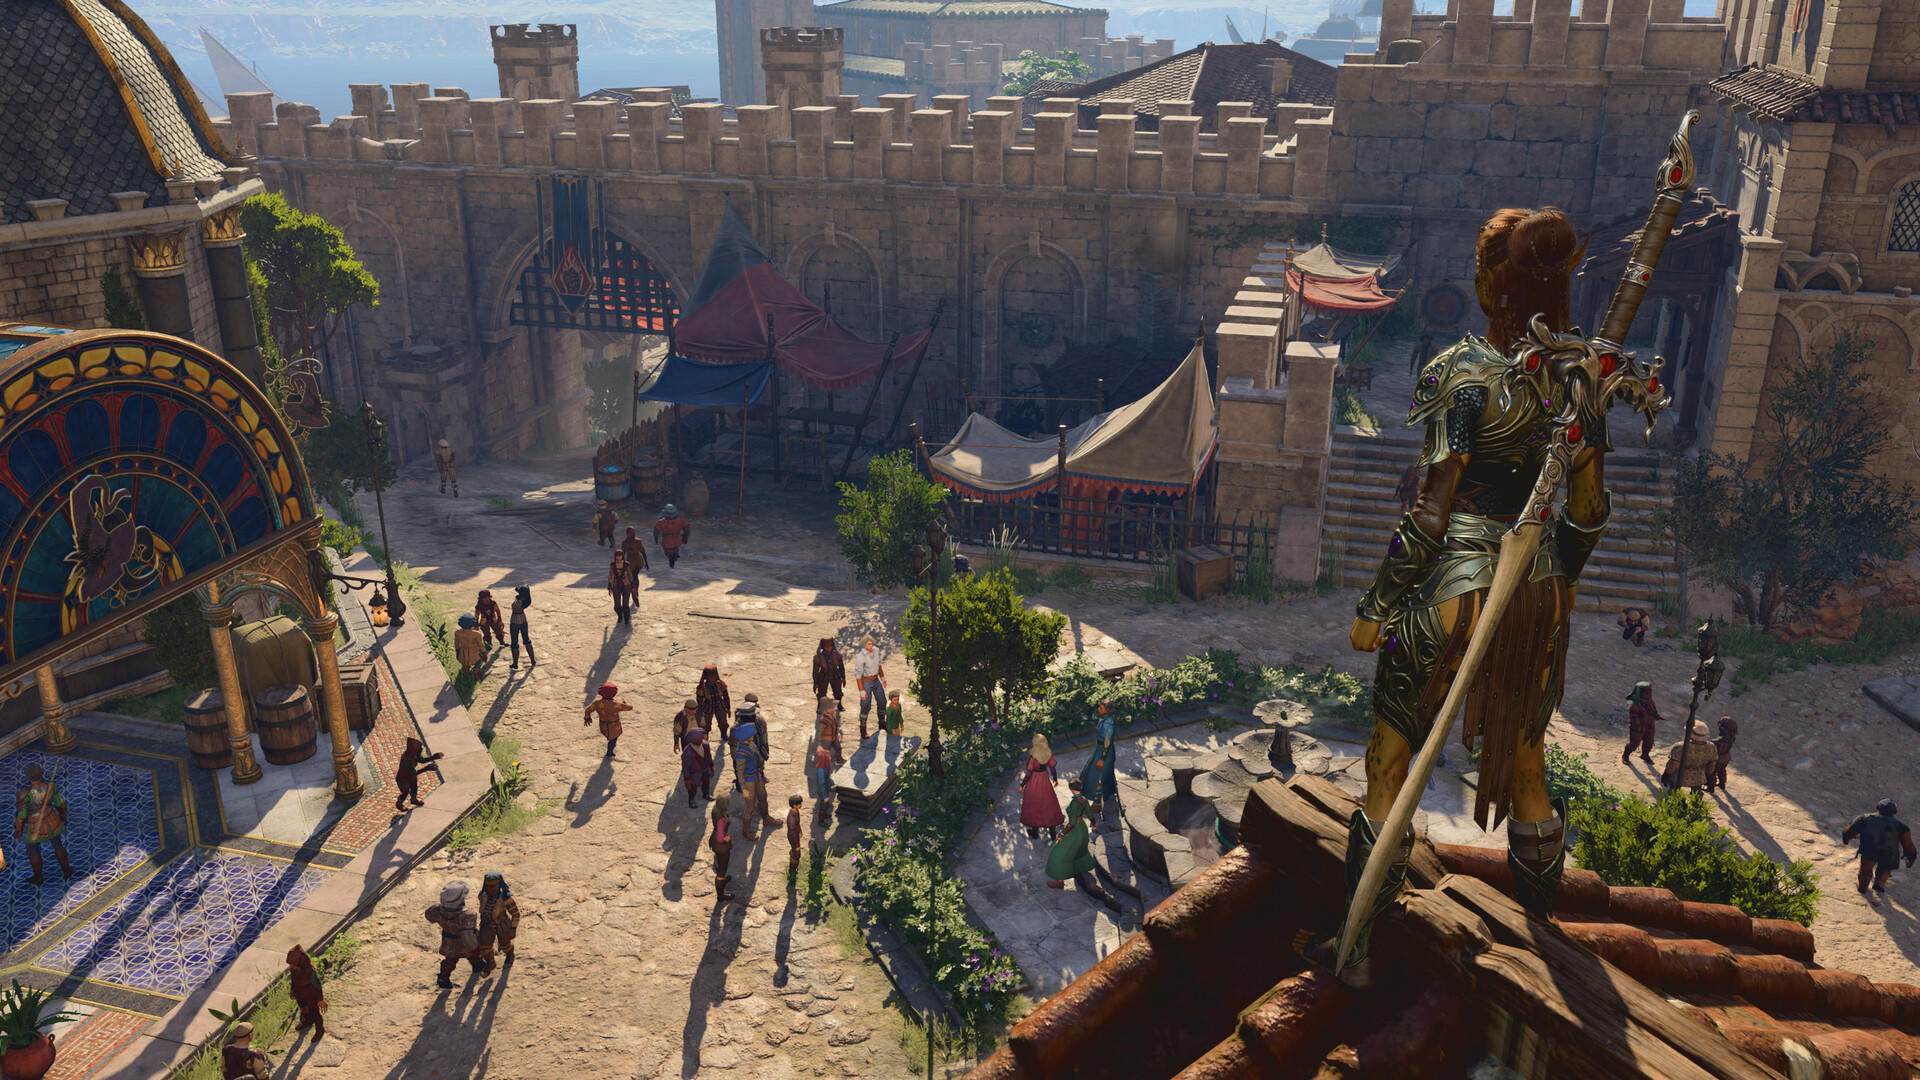 Screenshot 1 of Baldur's Gate 3 